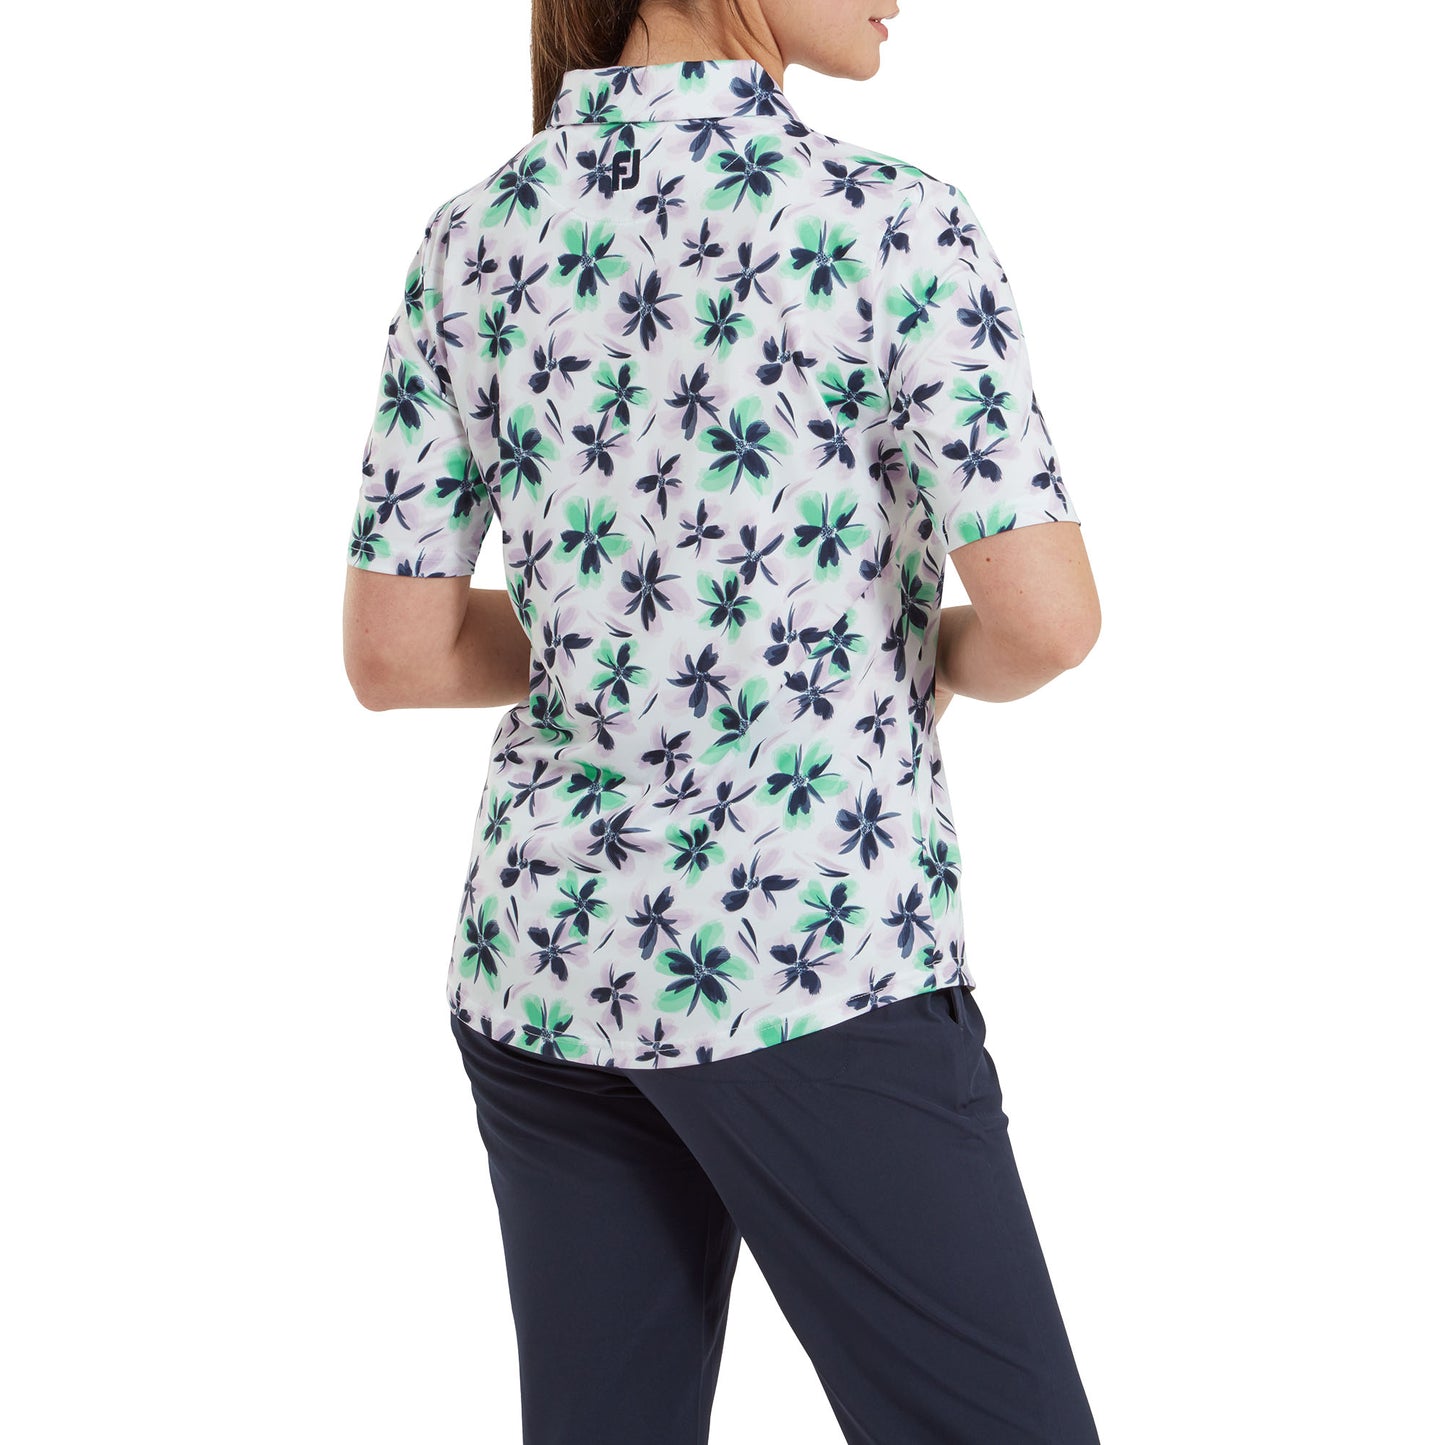 FootJoy Ladies Short Sleeve Floral Print Polo in Lavender, Mint & Navy